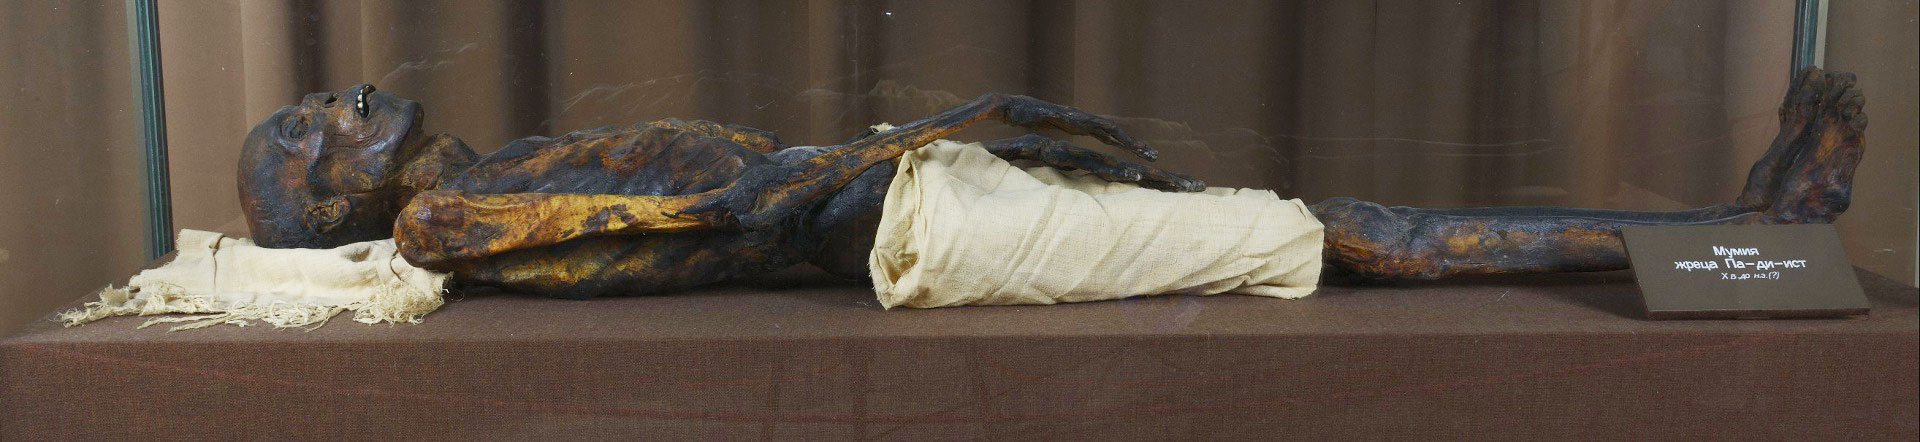 Мумия жреца Па-ди-ист в Эрмитаже, предположительно Х в. до н.э., 172 см.